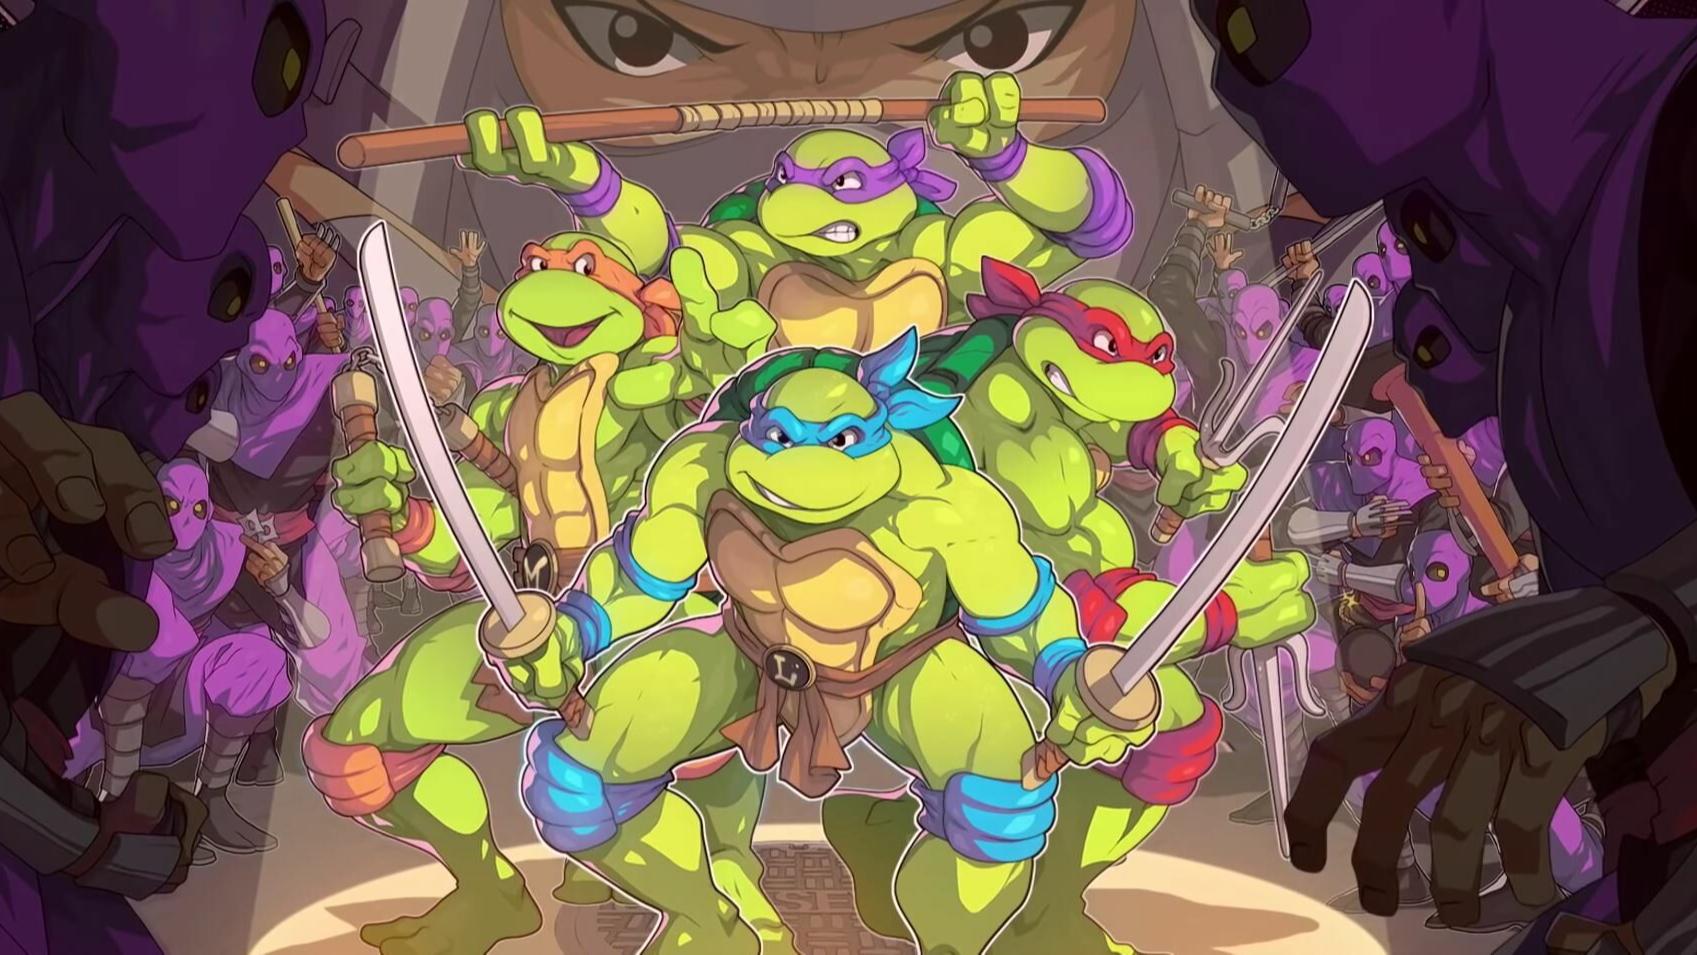 Всего за неделю продажи Teenage Mutant Ninja Turtles: Shredder’s Revenge превысили 1 млн копий